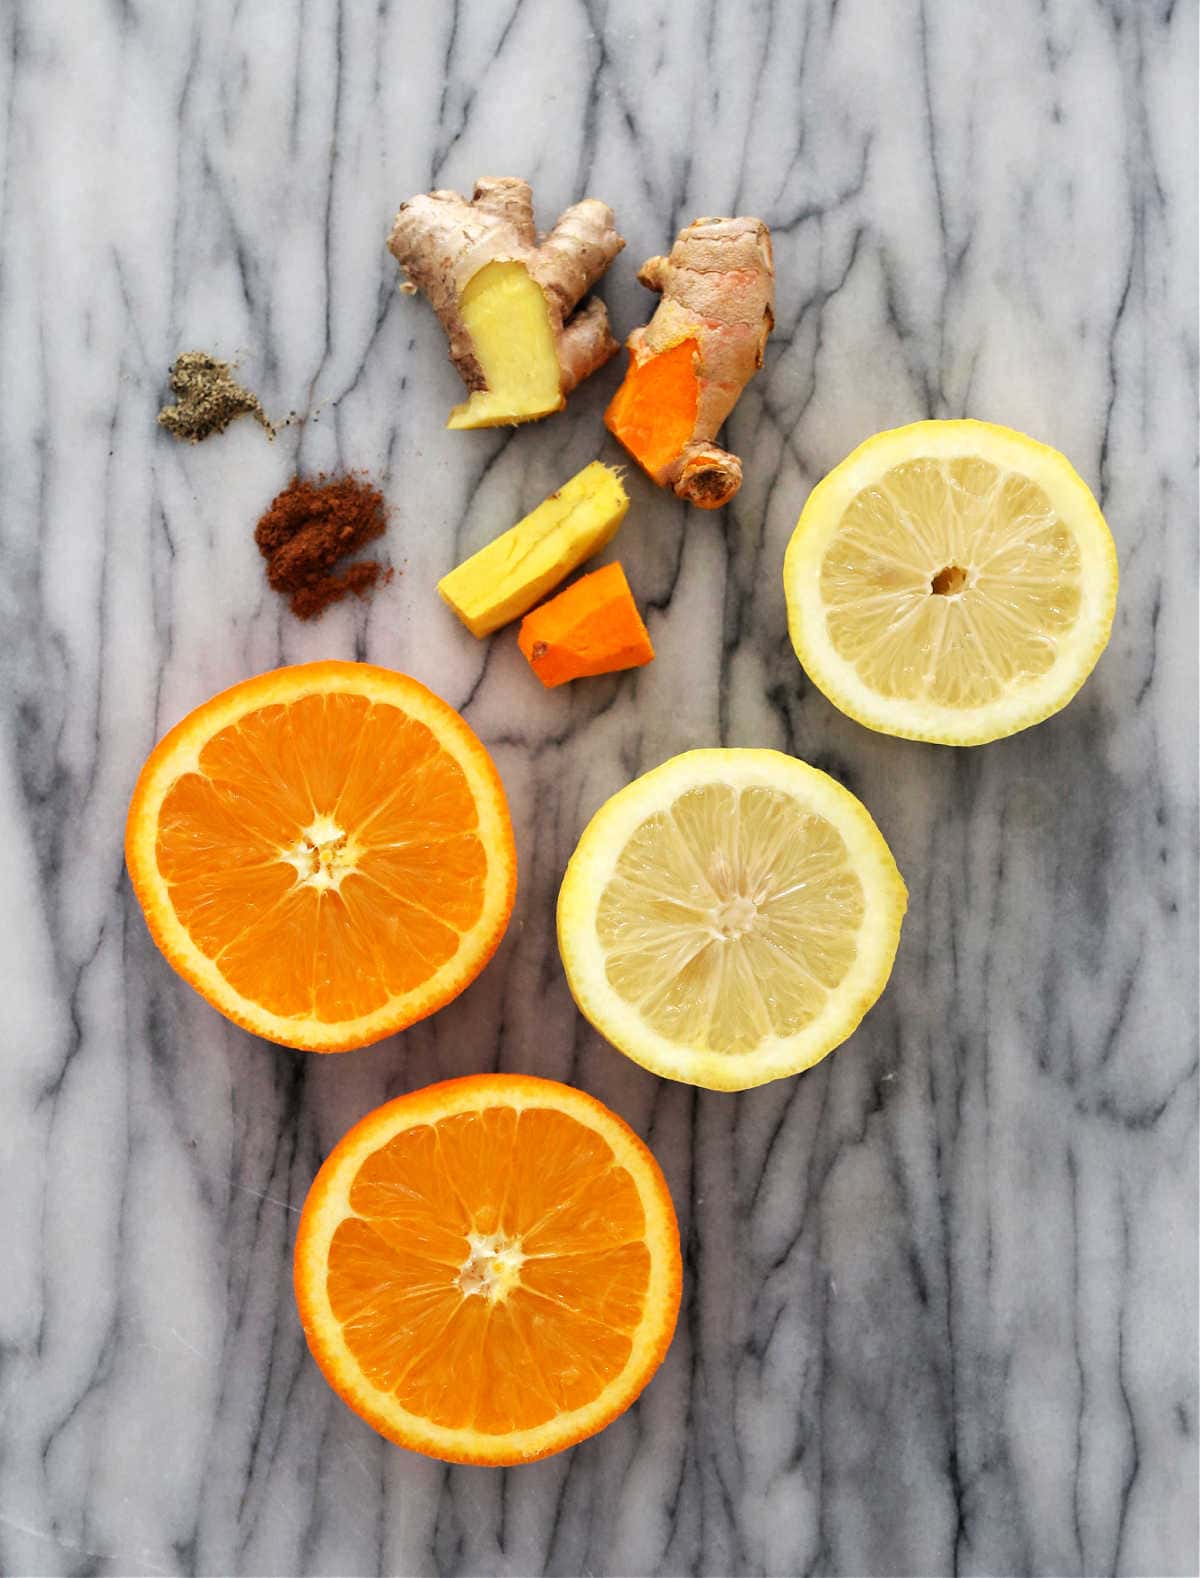 Ingredients of ginger root, turmeric root, orange, lemon, pepper, cayenne pepper.